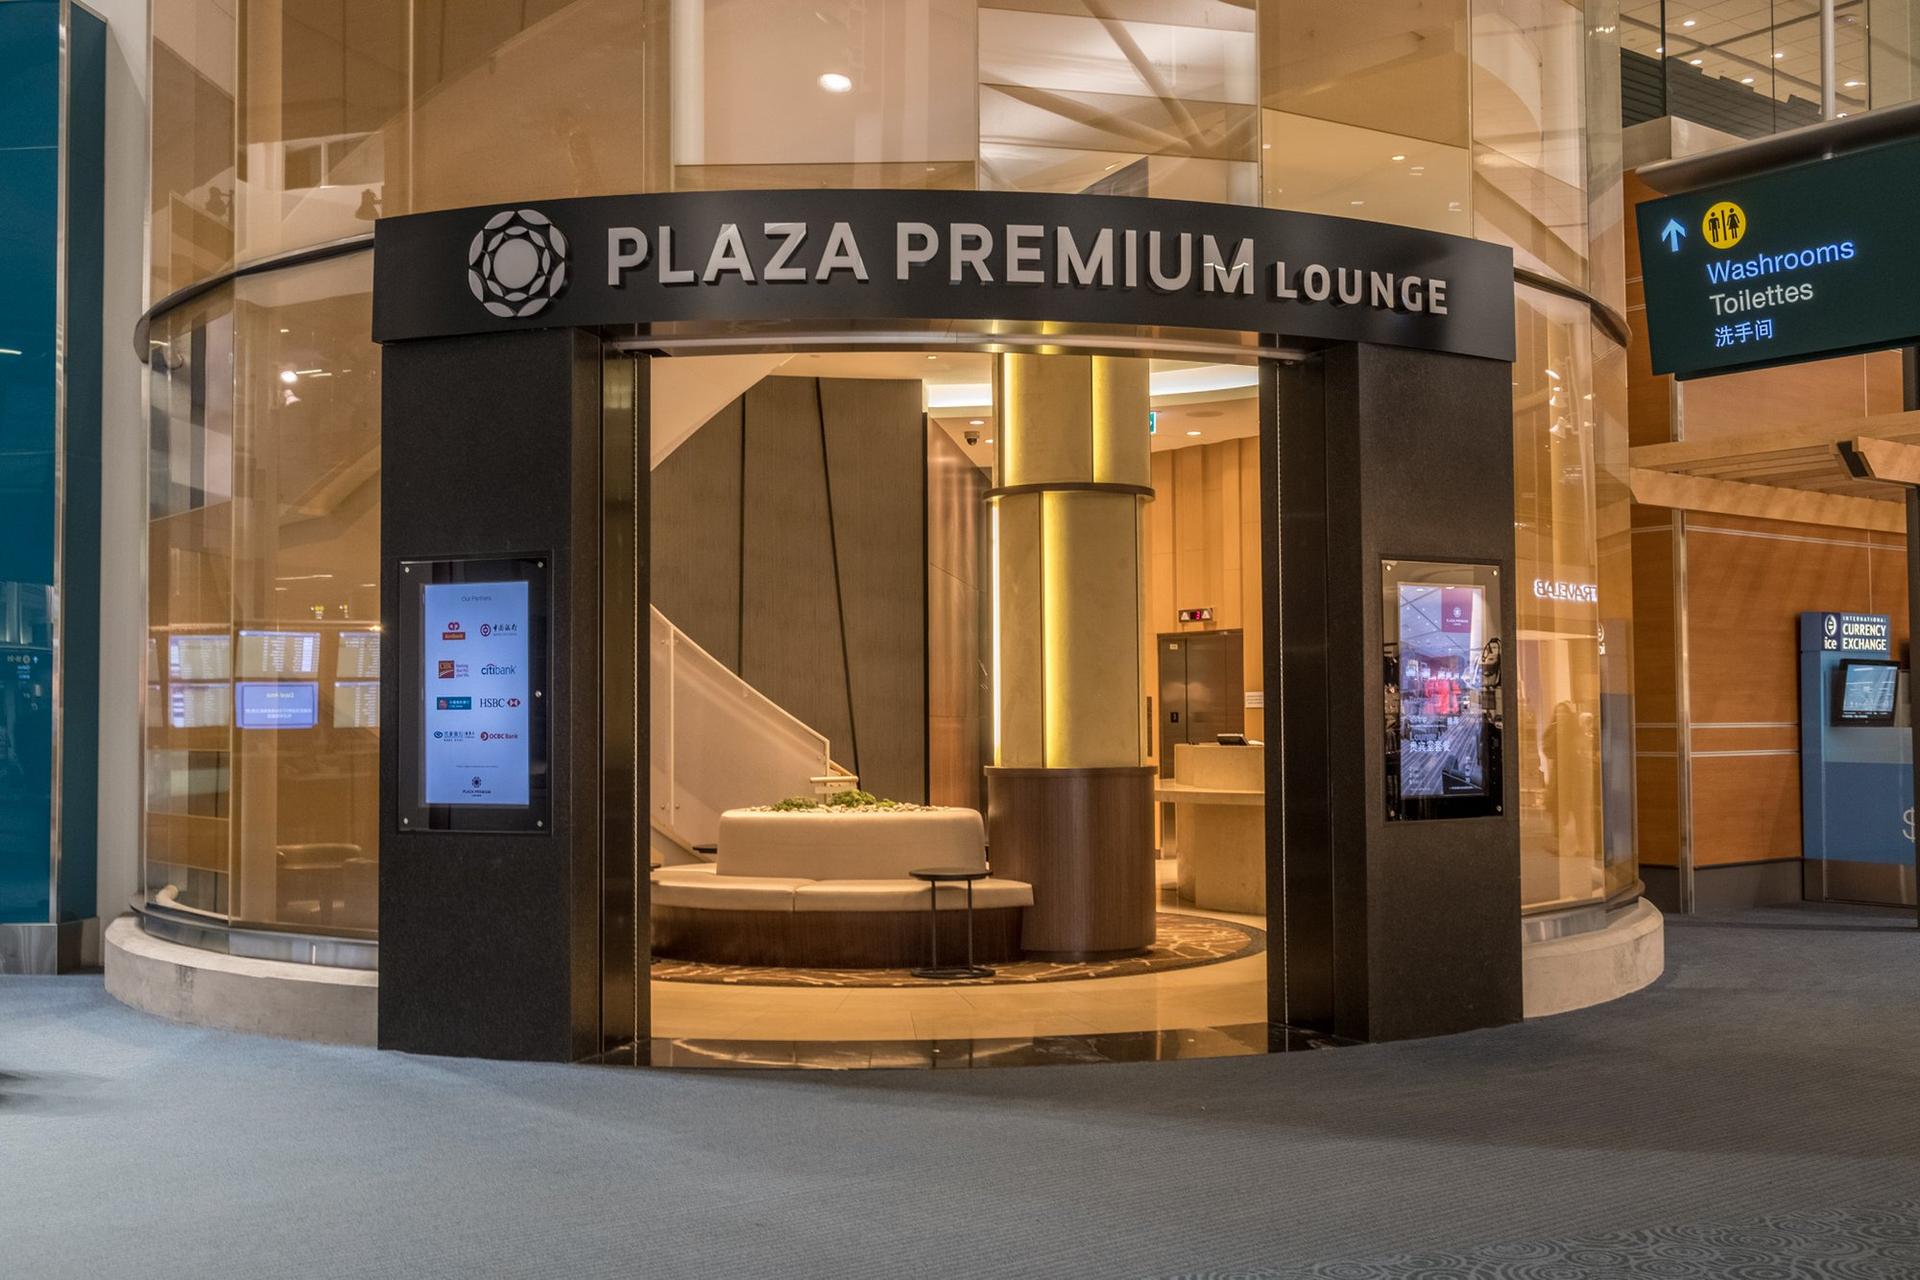 Plaza Premium Lounge (Domestic Gate B15) image 41 of 72